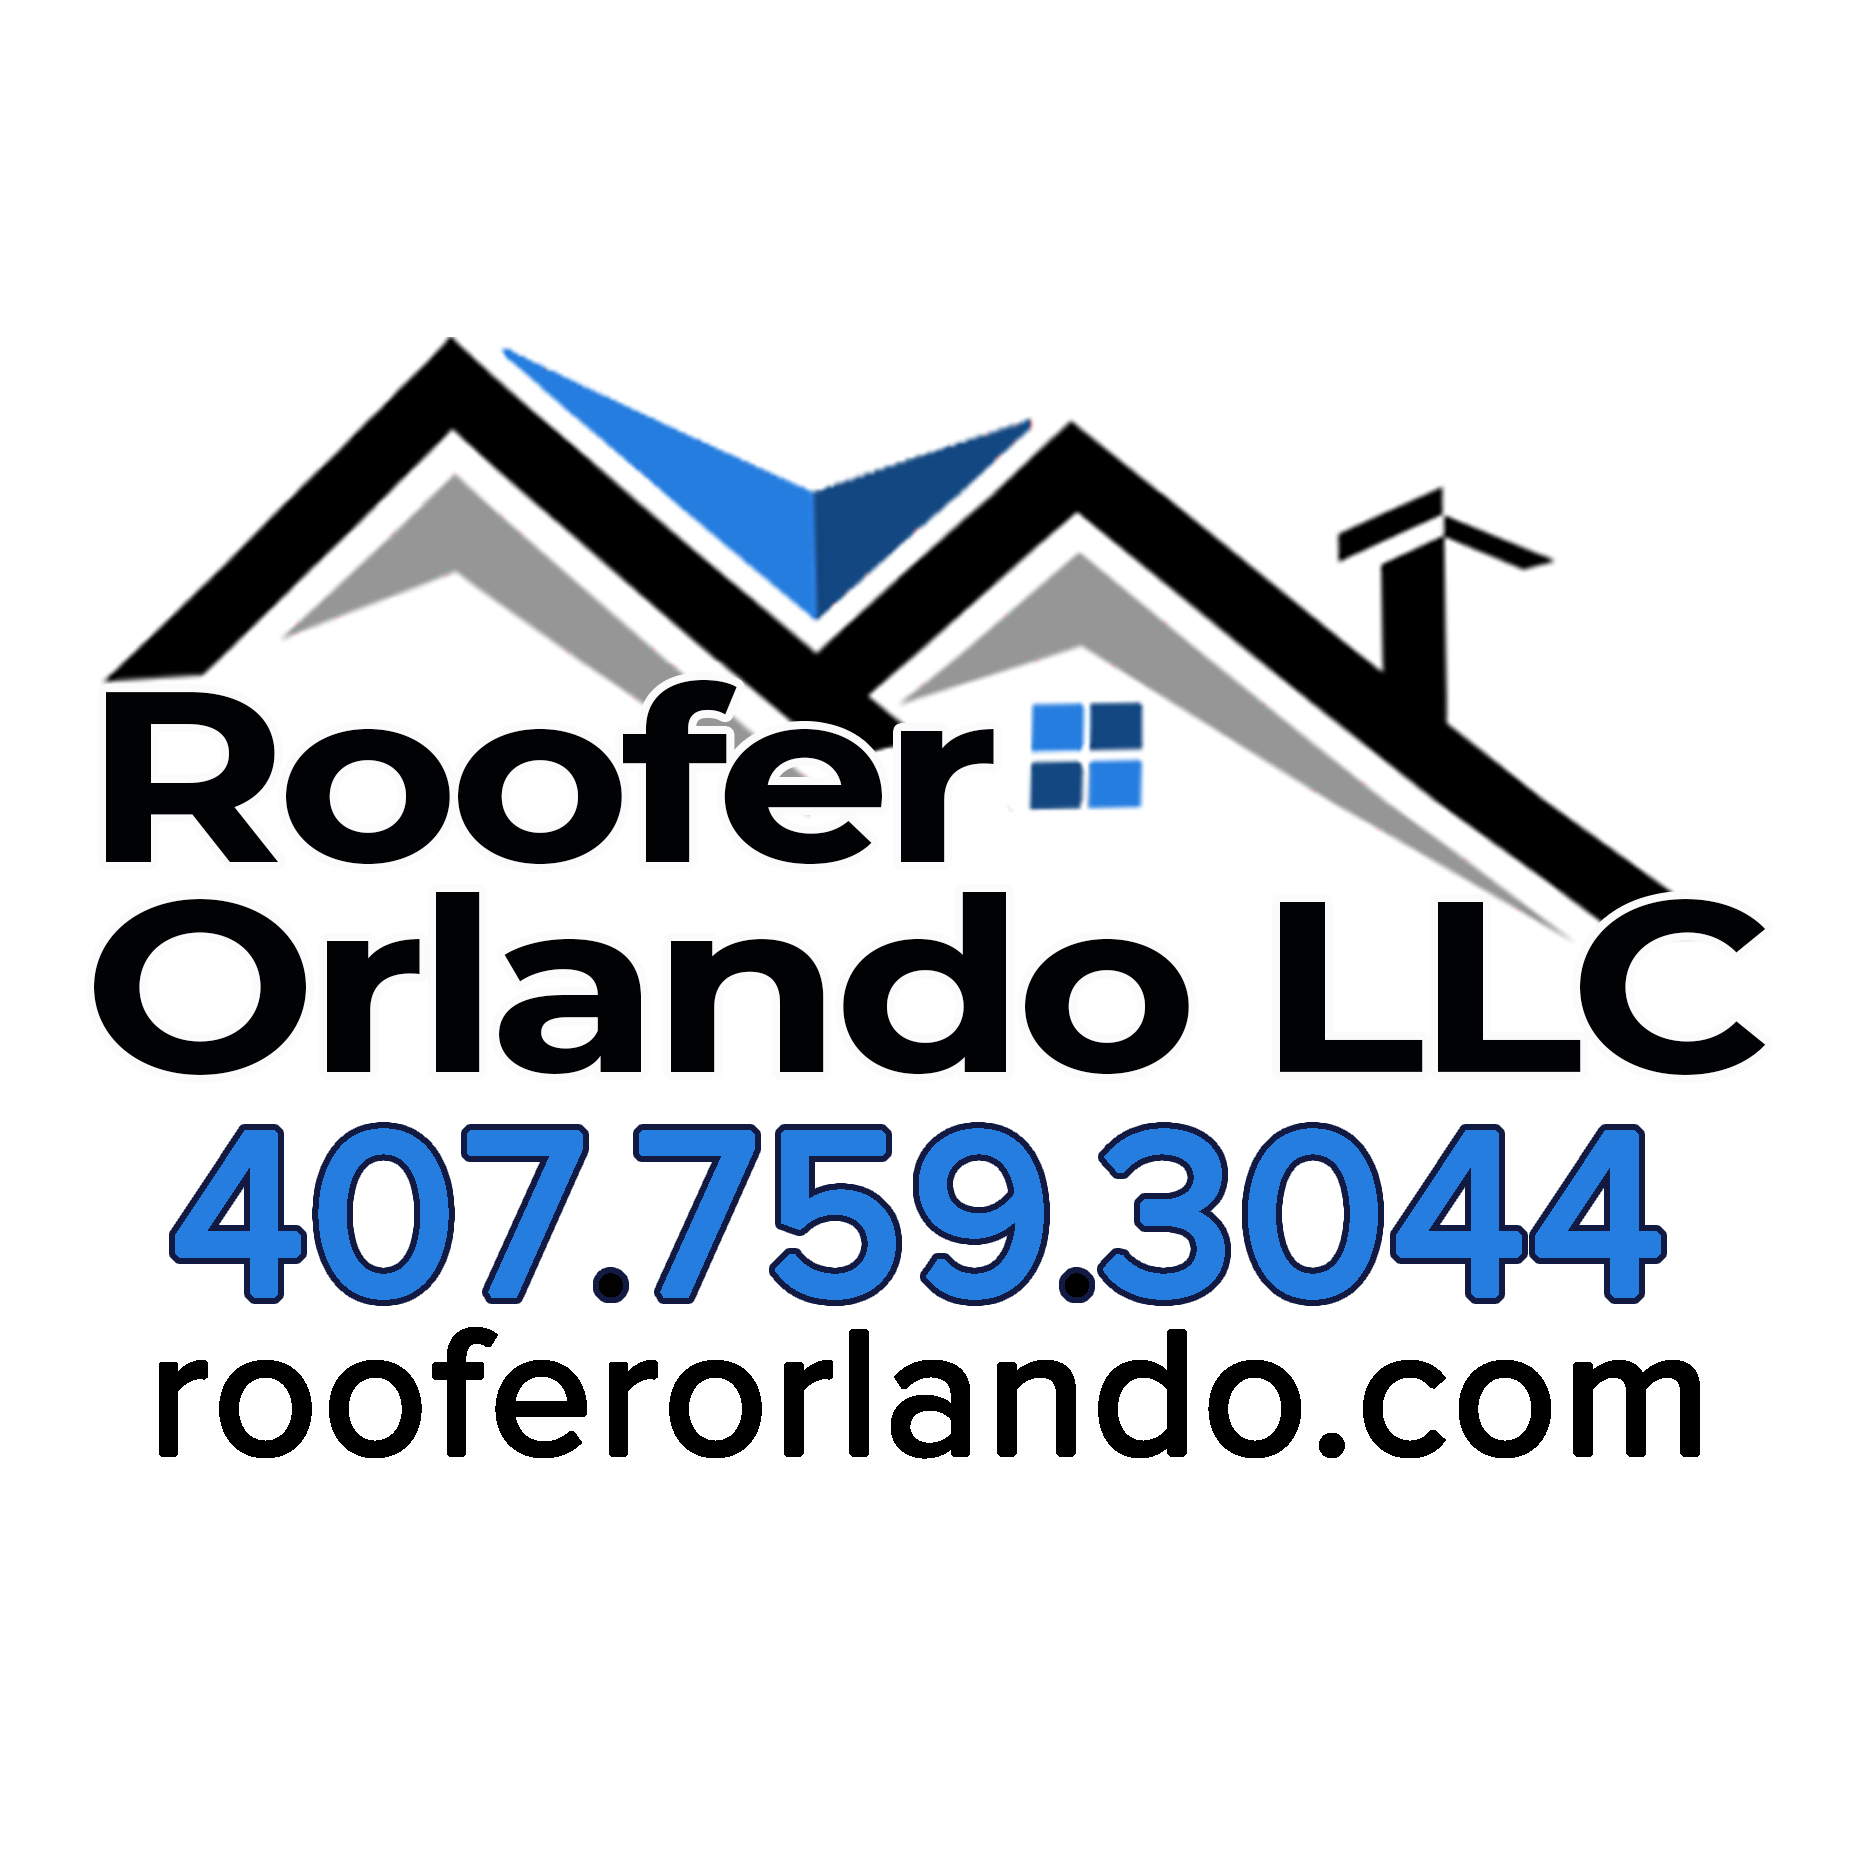 Roofer Orlando LLC